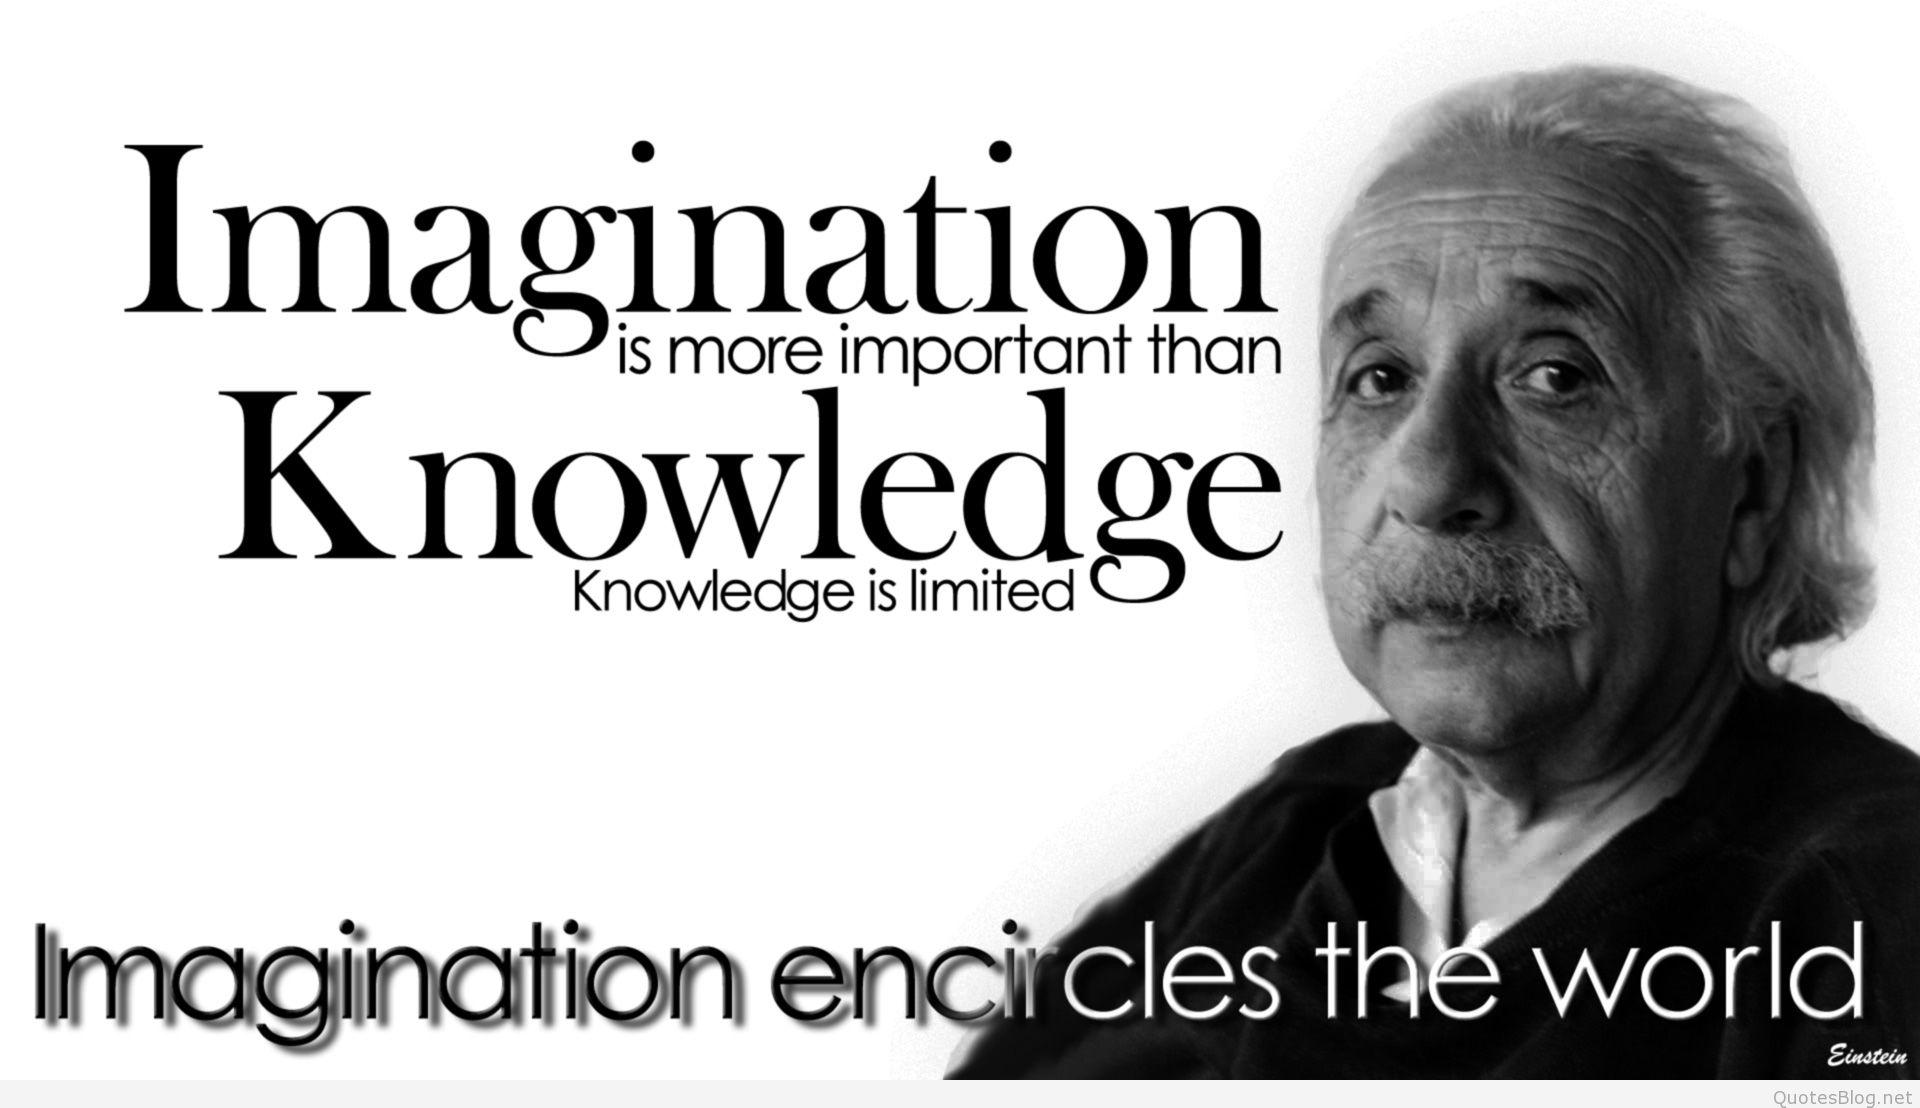 Albert Einstein Image quotes and wallpaper